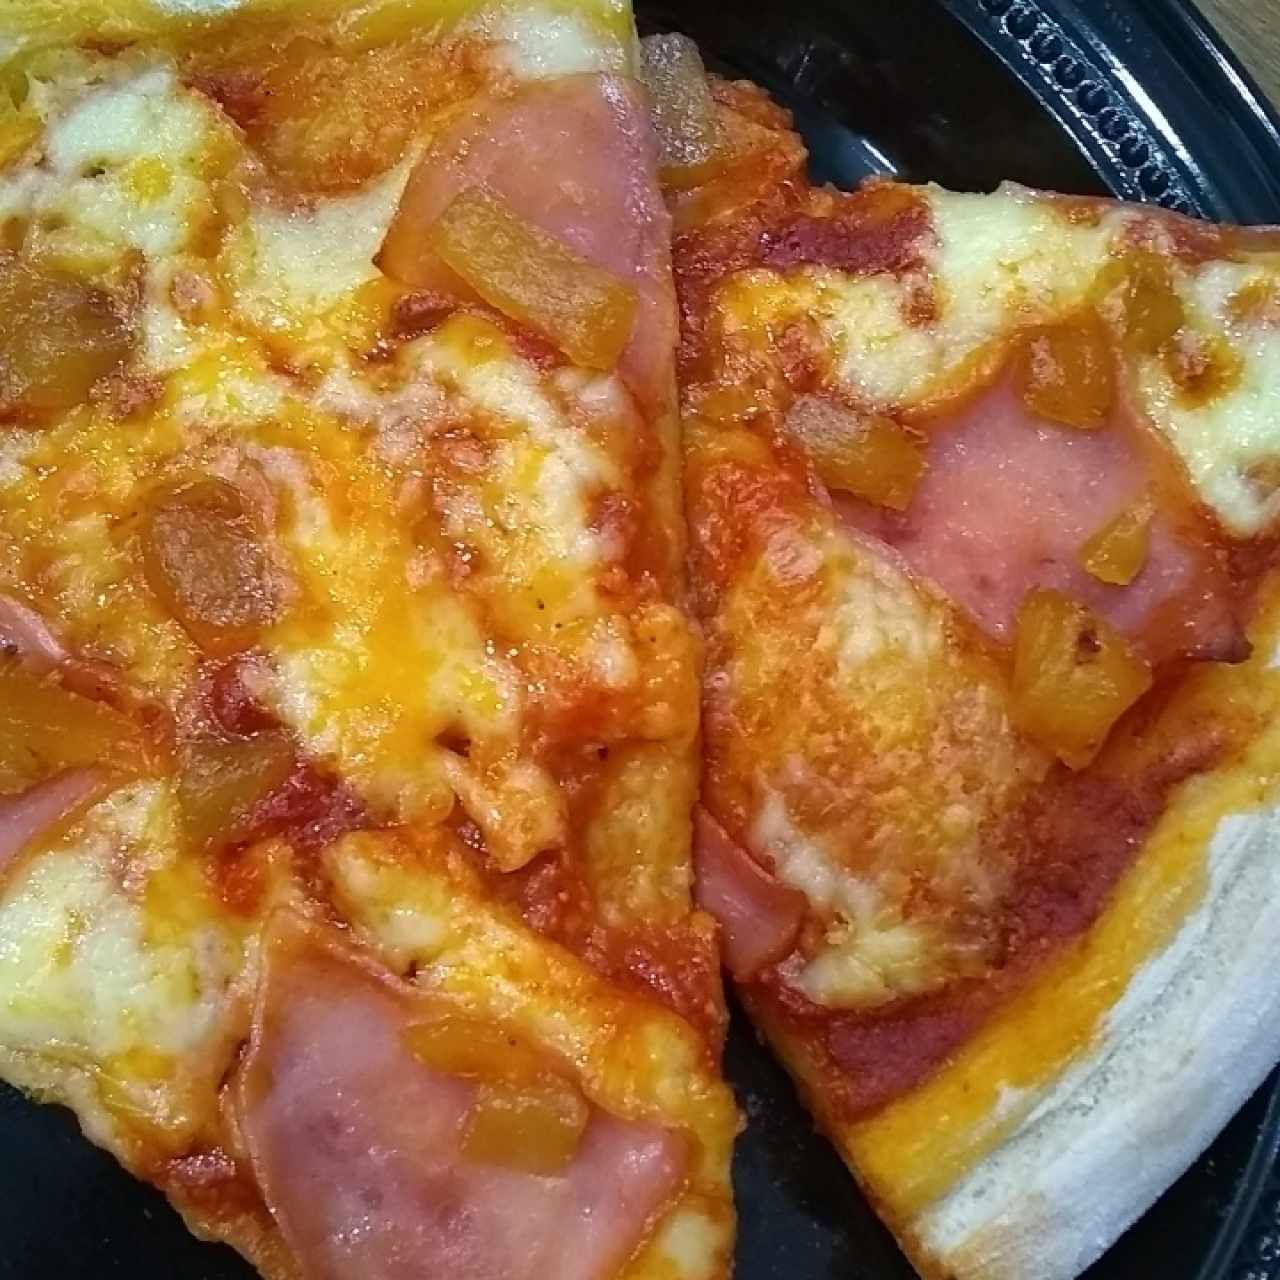 Pizzas - Hawaiana mi favorita